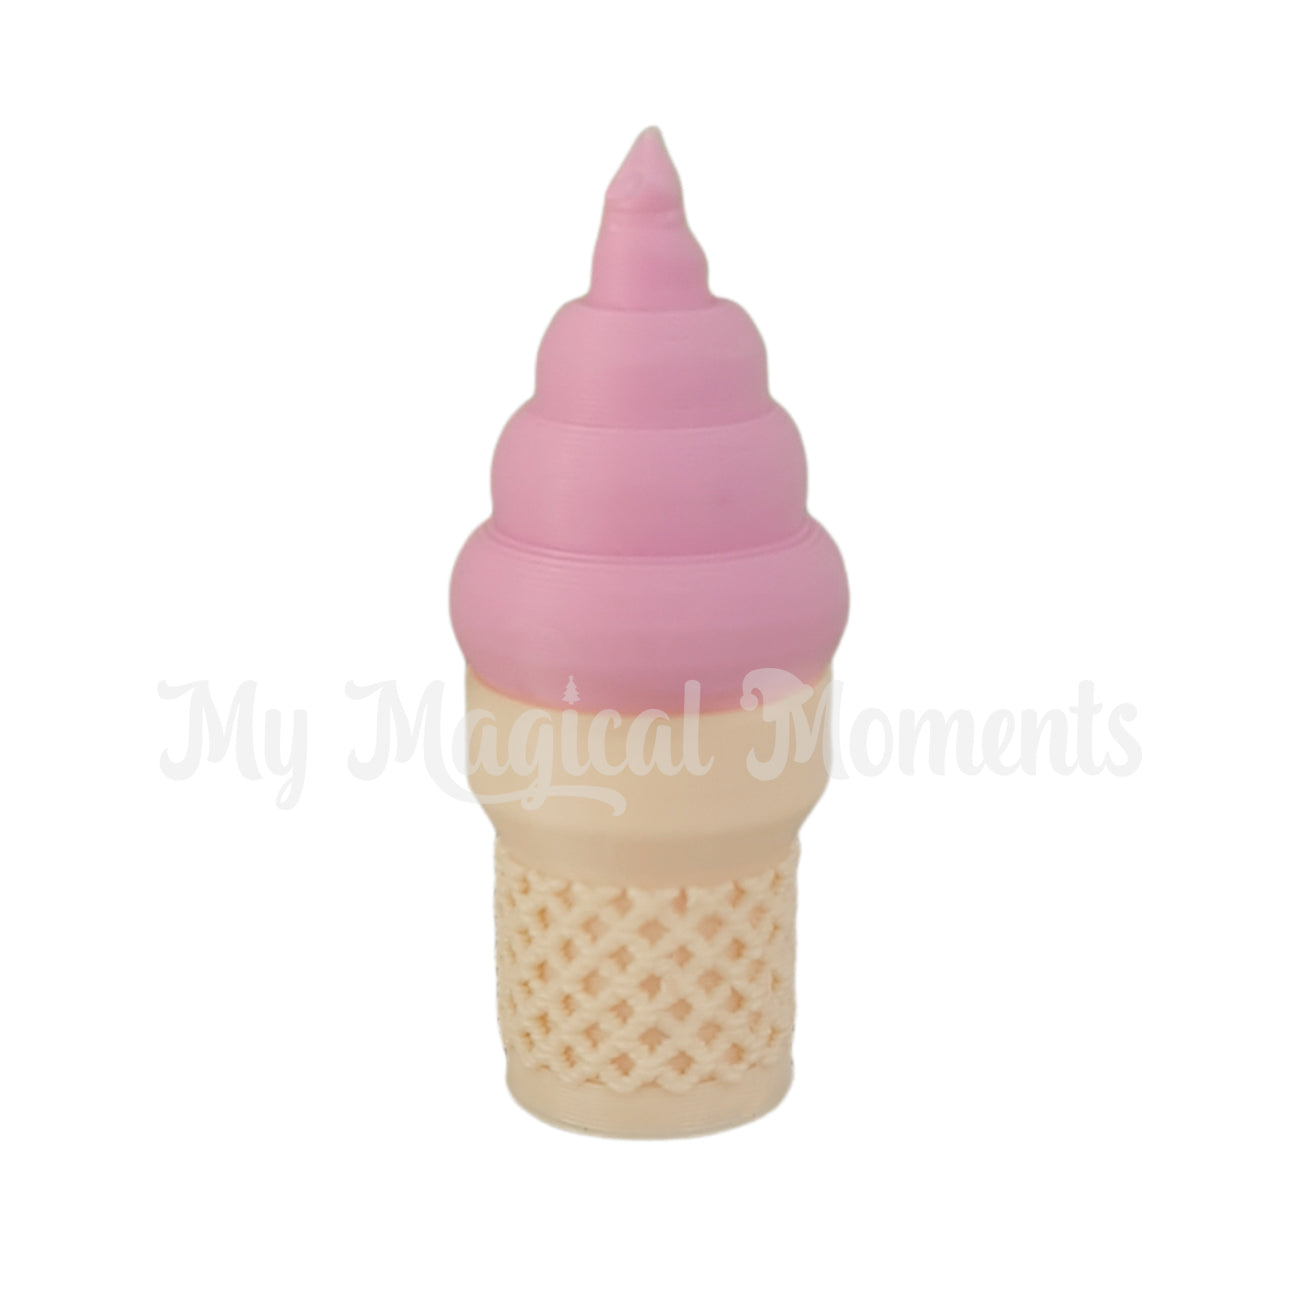 miniature soft serve cone strawberry